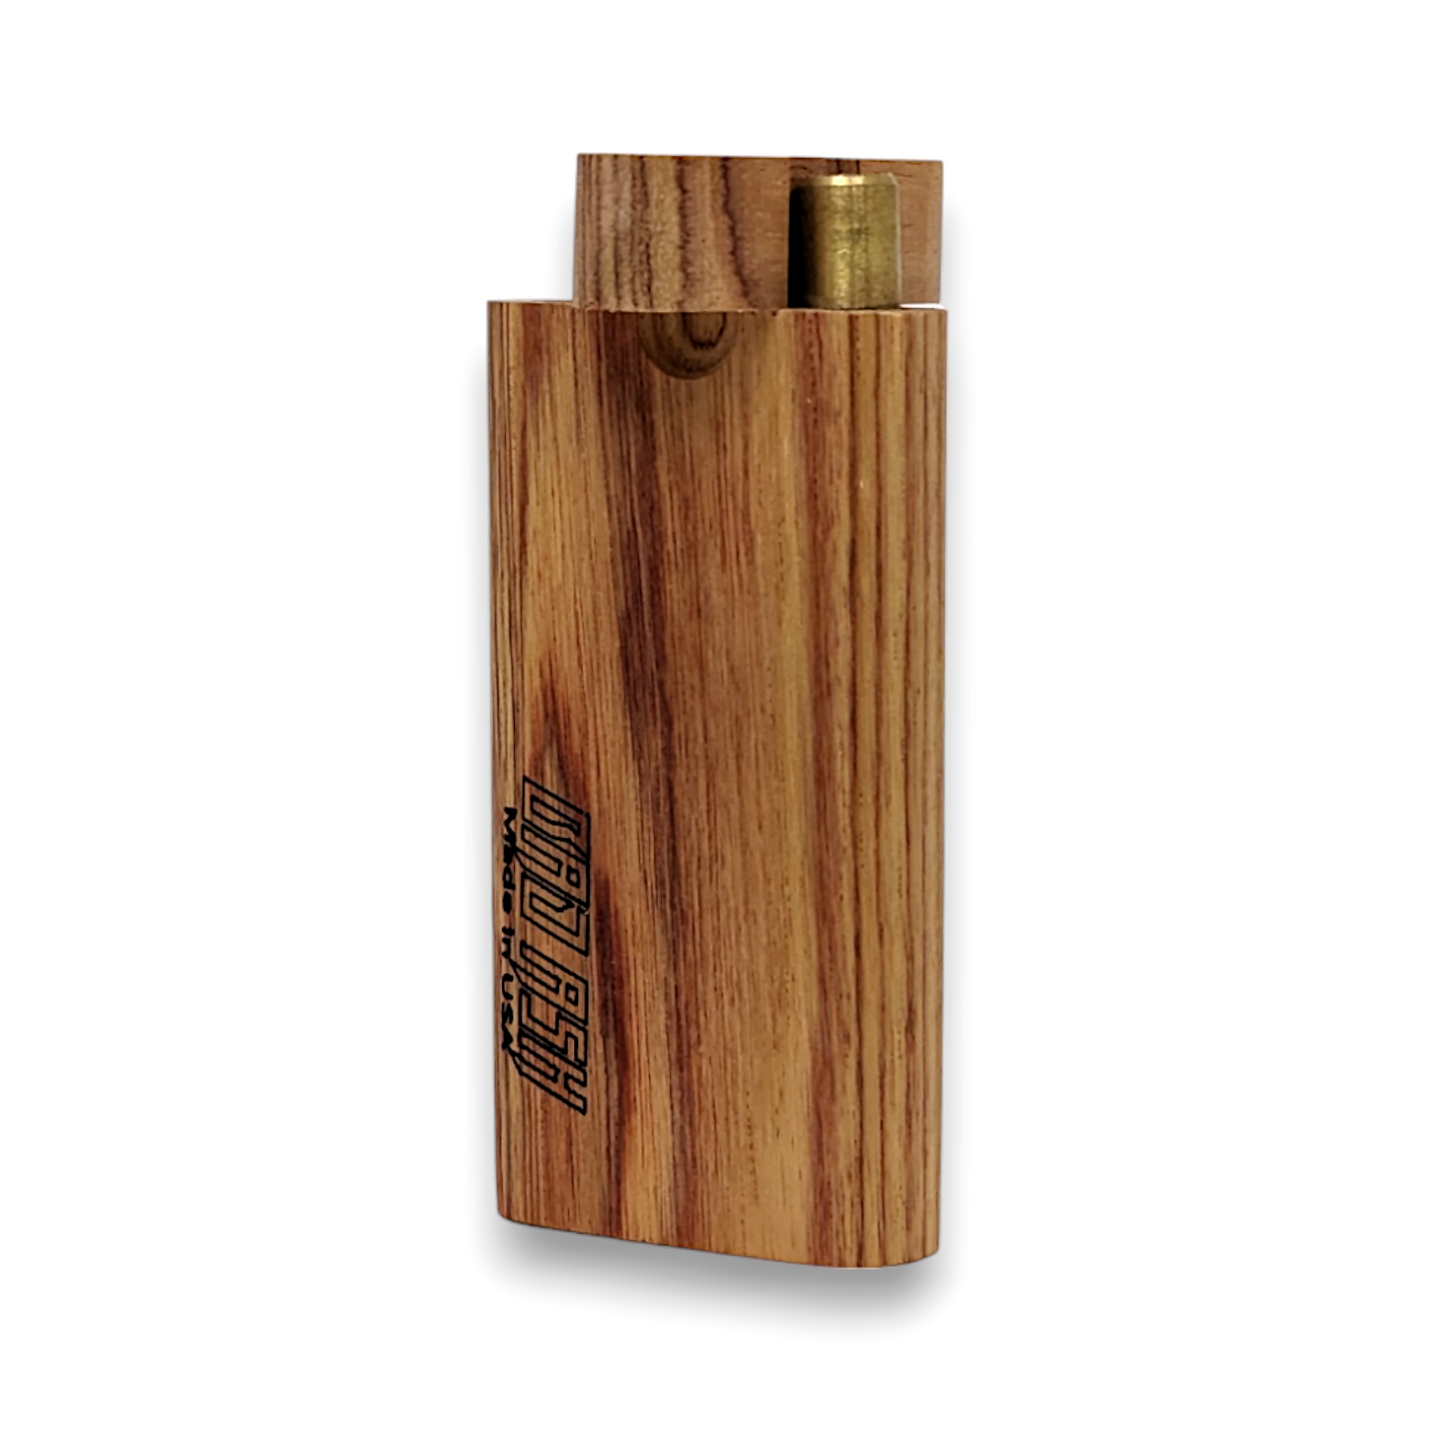 4" Bad Ash Smoking Pipe One Hitter Wooden Box Dugout Brass Bat USA